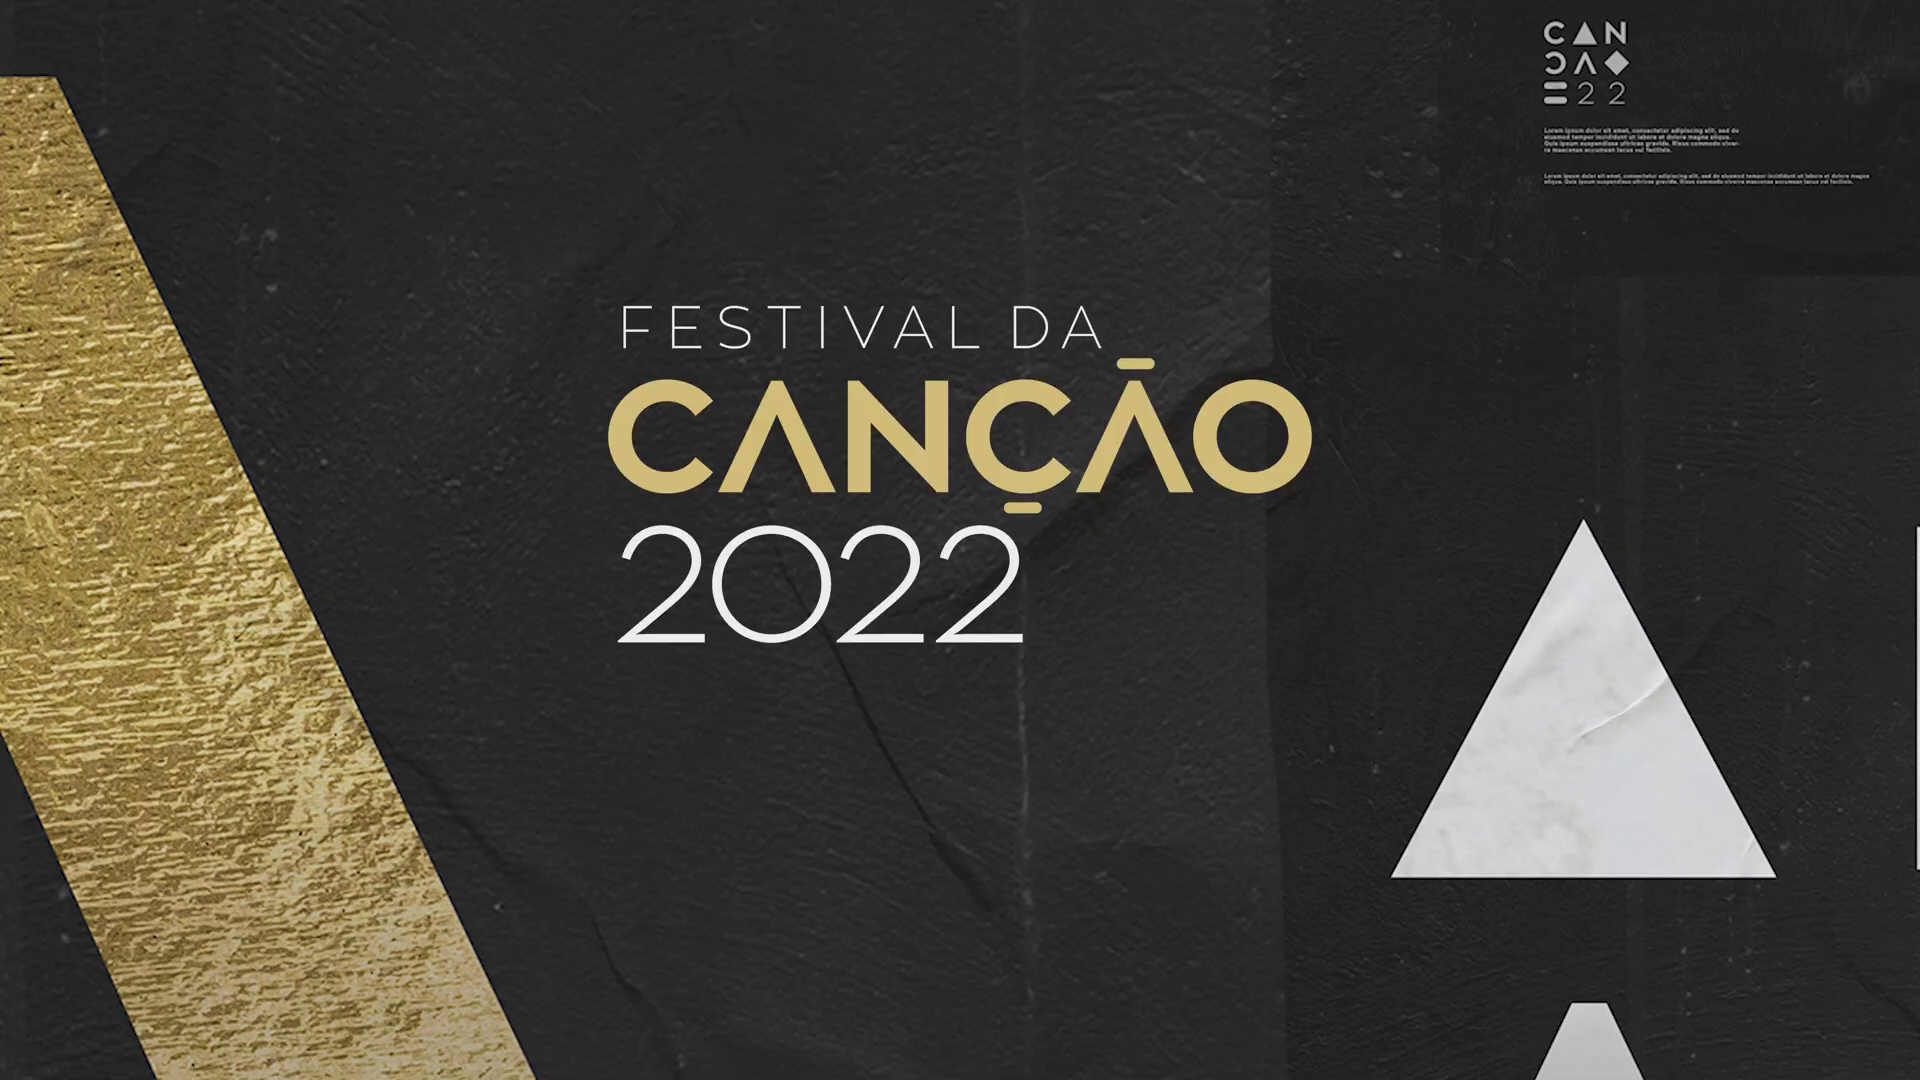 Portugal chooses its last 5 finalists for Festival da Canção 2022